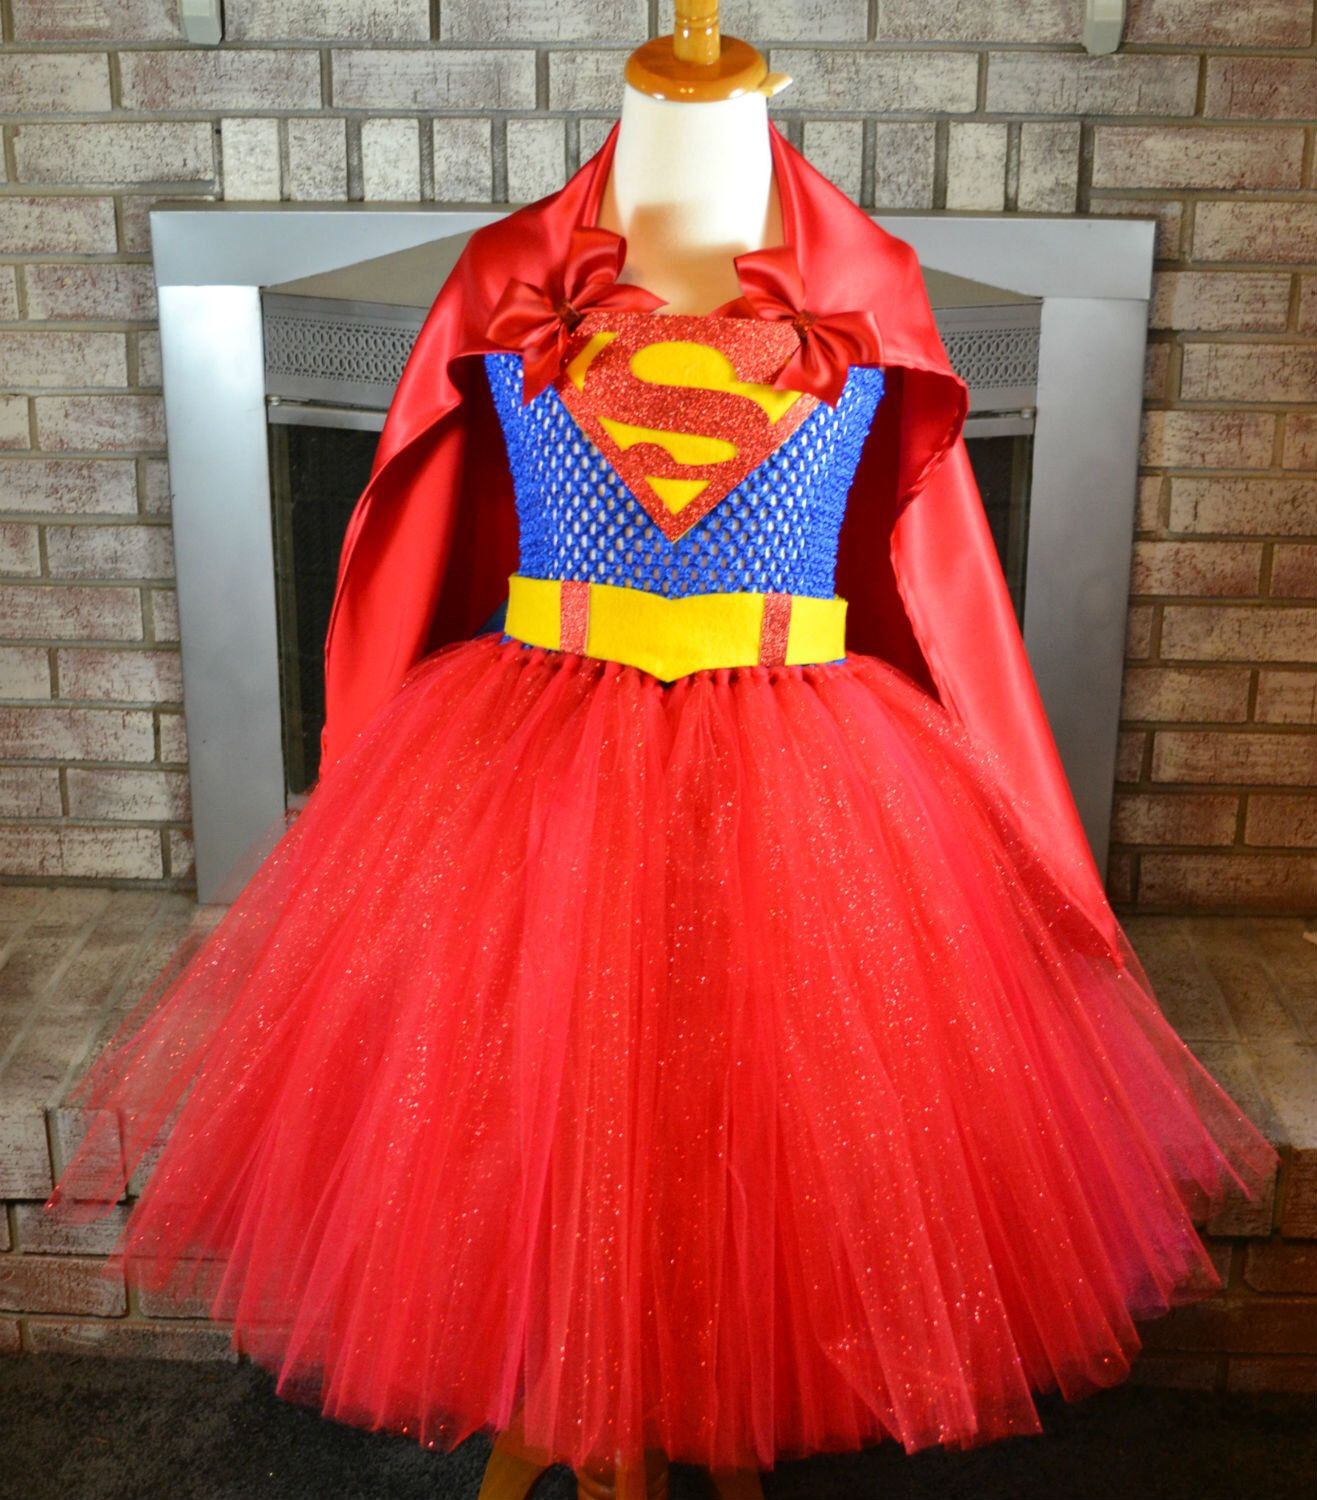 Best ideas about DIY Supergirl Tutu Costume
. Save or Pin Super Girl Tutu Super Girl Dress Super Girl Costume Now.